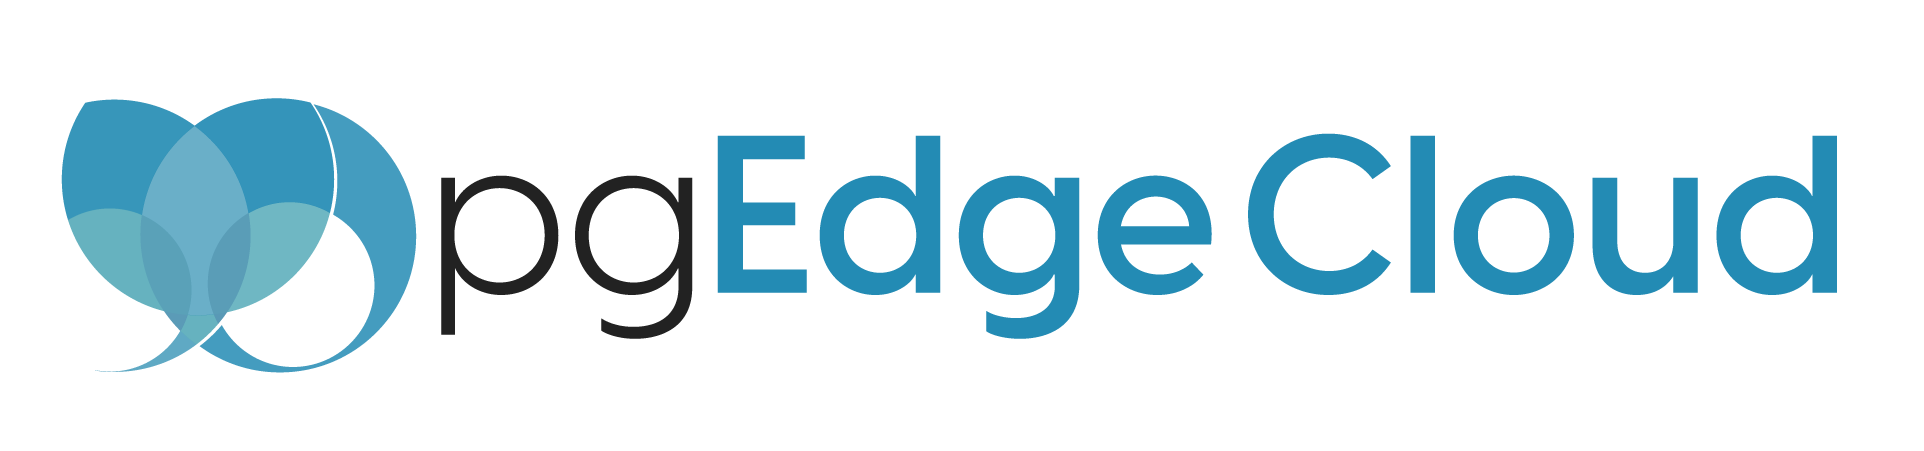 pgEdge logo